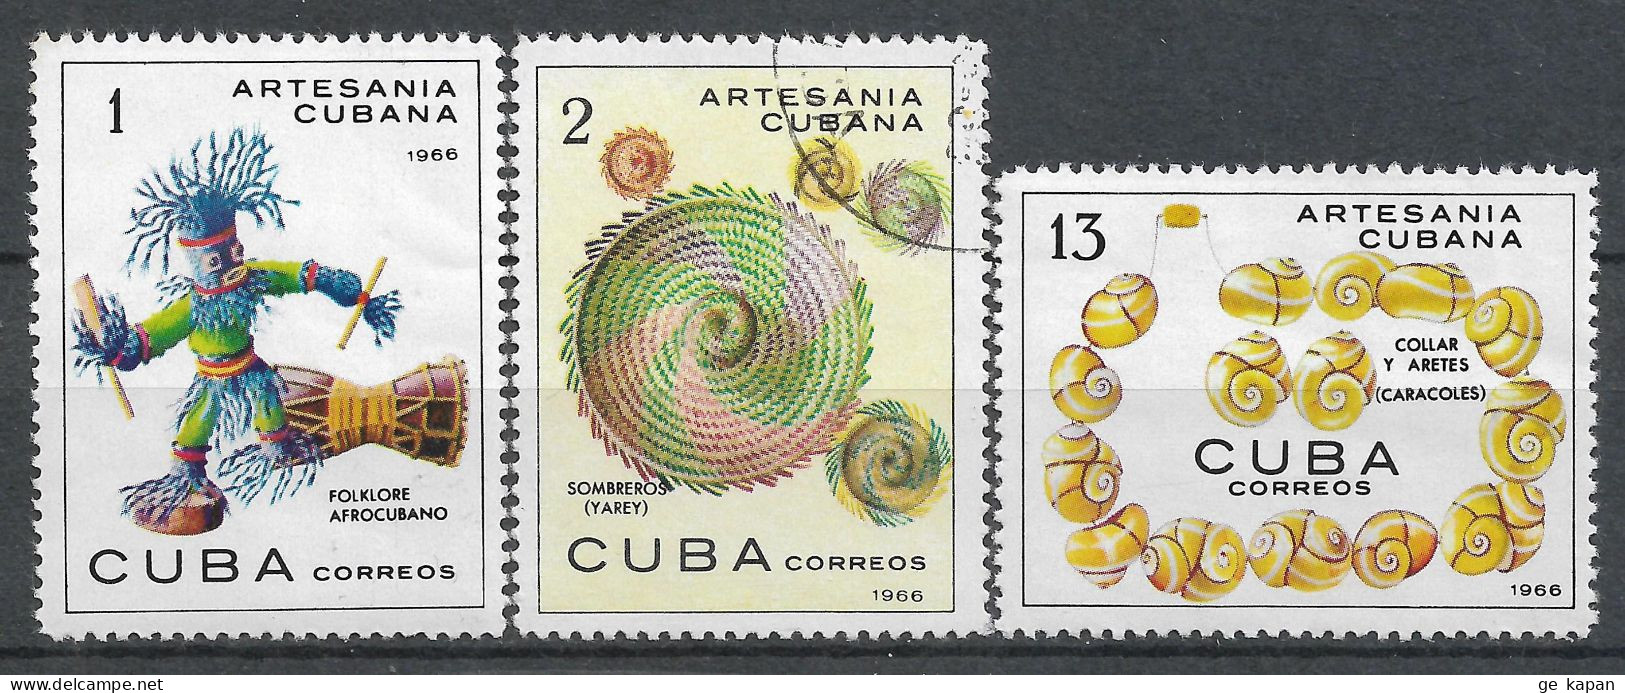 1966 CUBA SET OF 2 MNH + 1 USED STAMPS (Michel # 1142,1143,1148) CV €2.50 - Ongebruikt